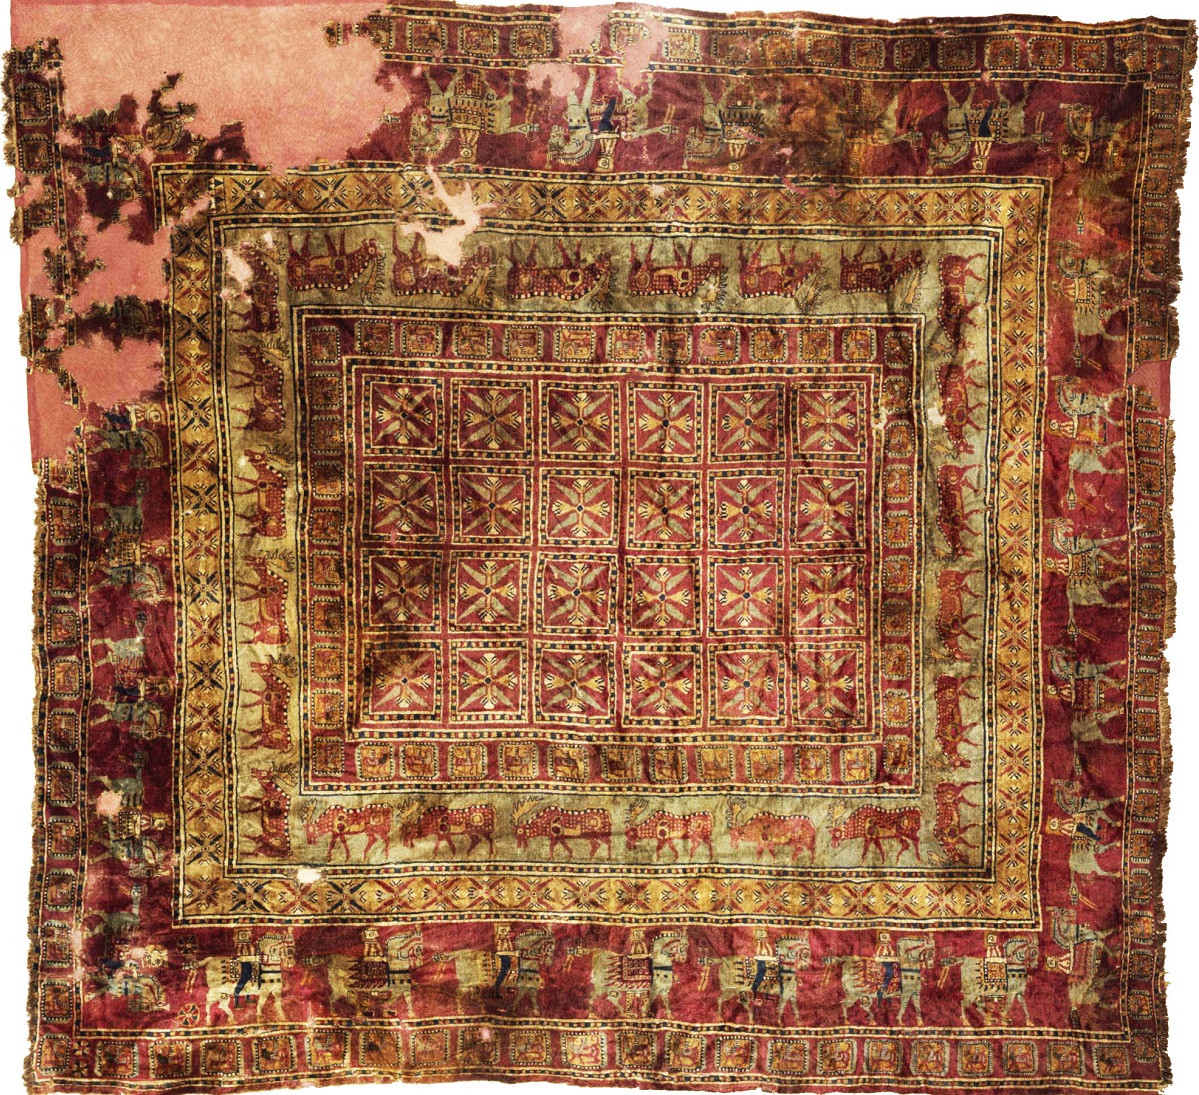 Revelado el secreto de la famosa alfombra Pazyryk